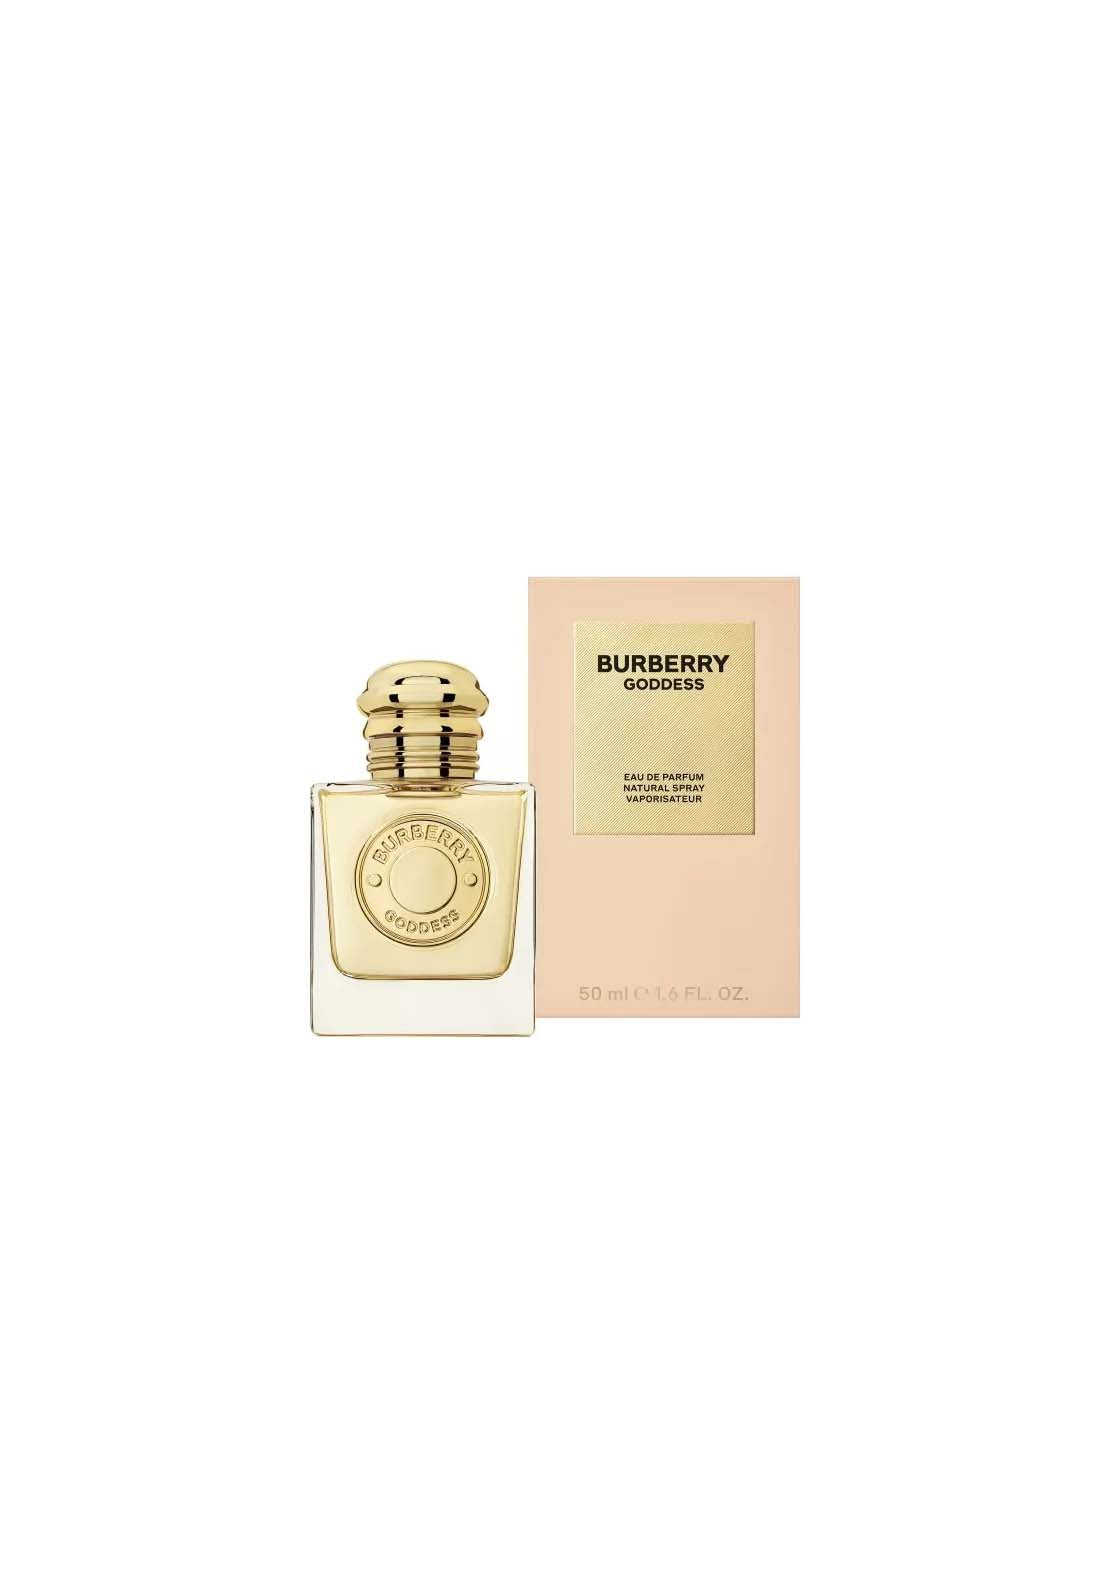 Burberry Burberry Goddess Eau de Parfum 3 Shaws Department Stores